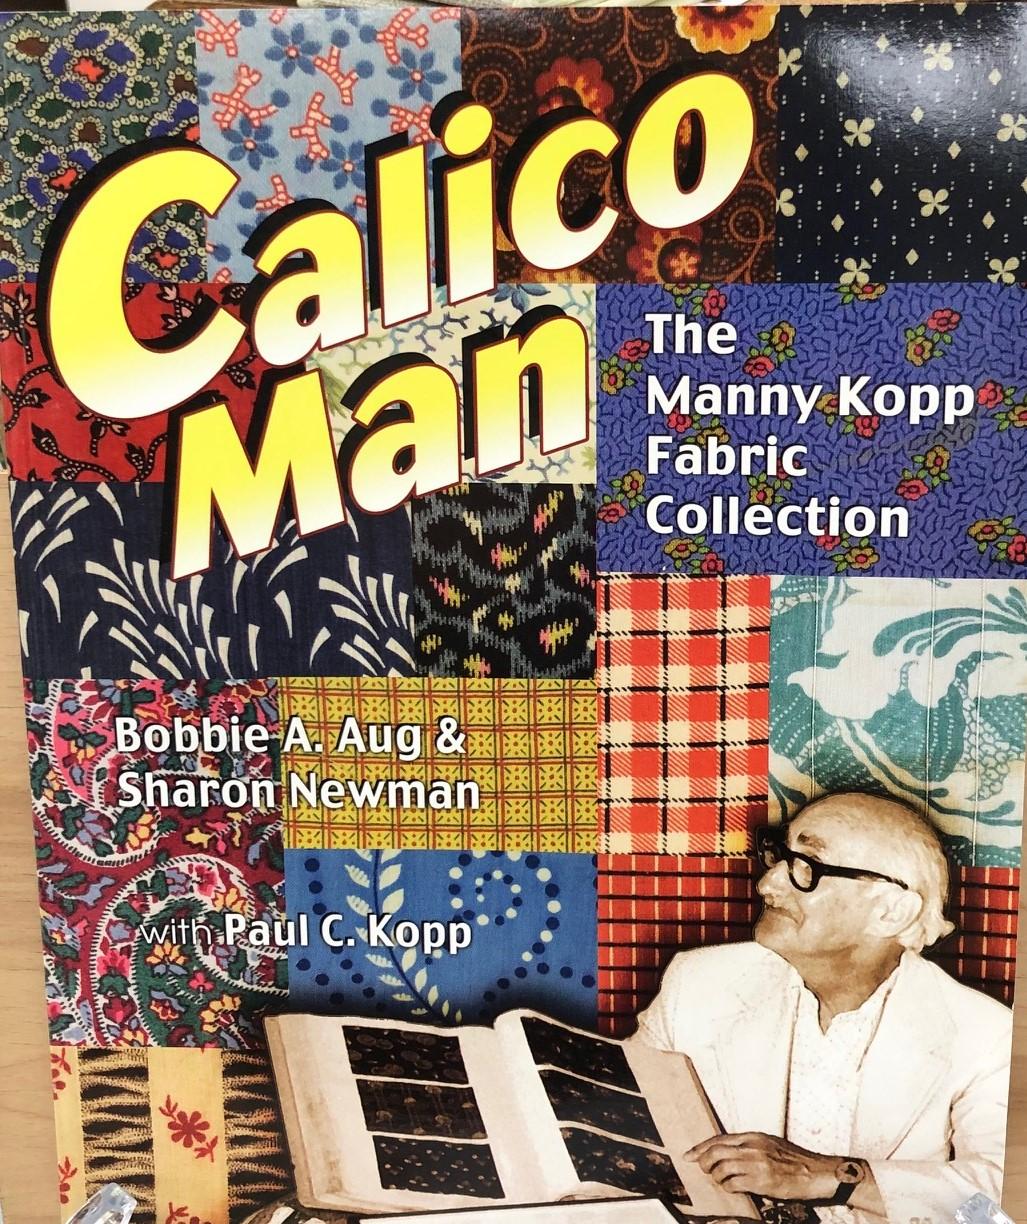 Calico Man